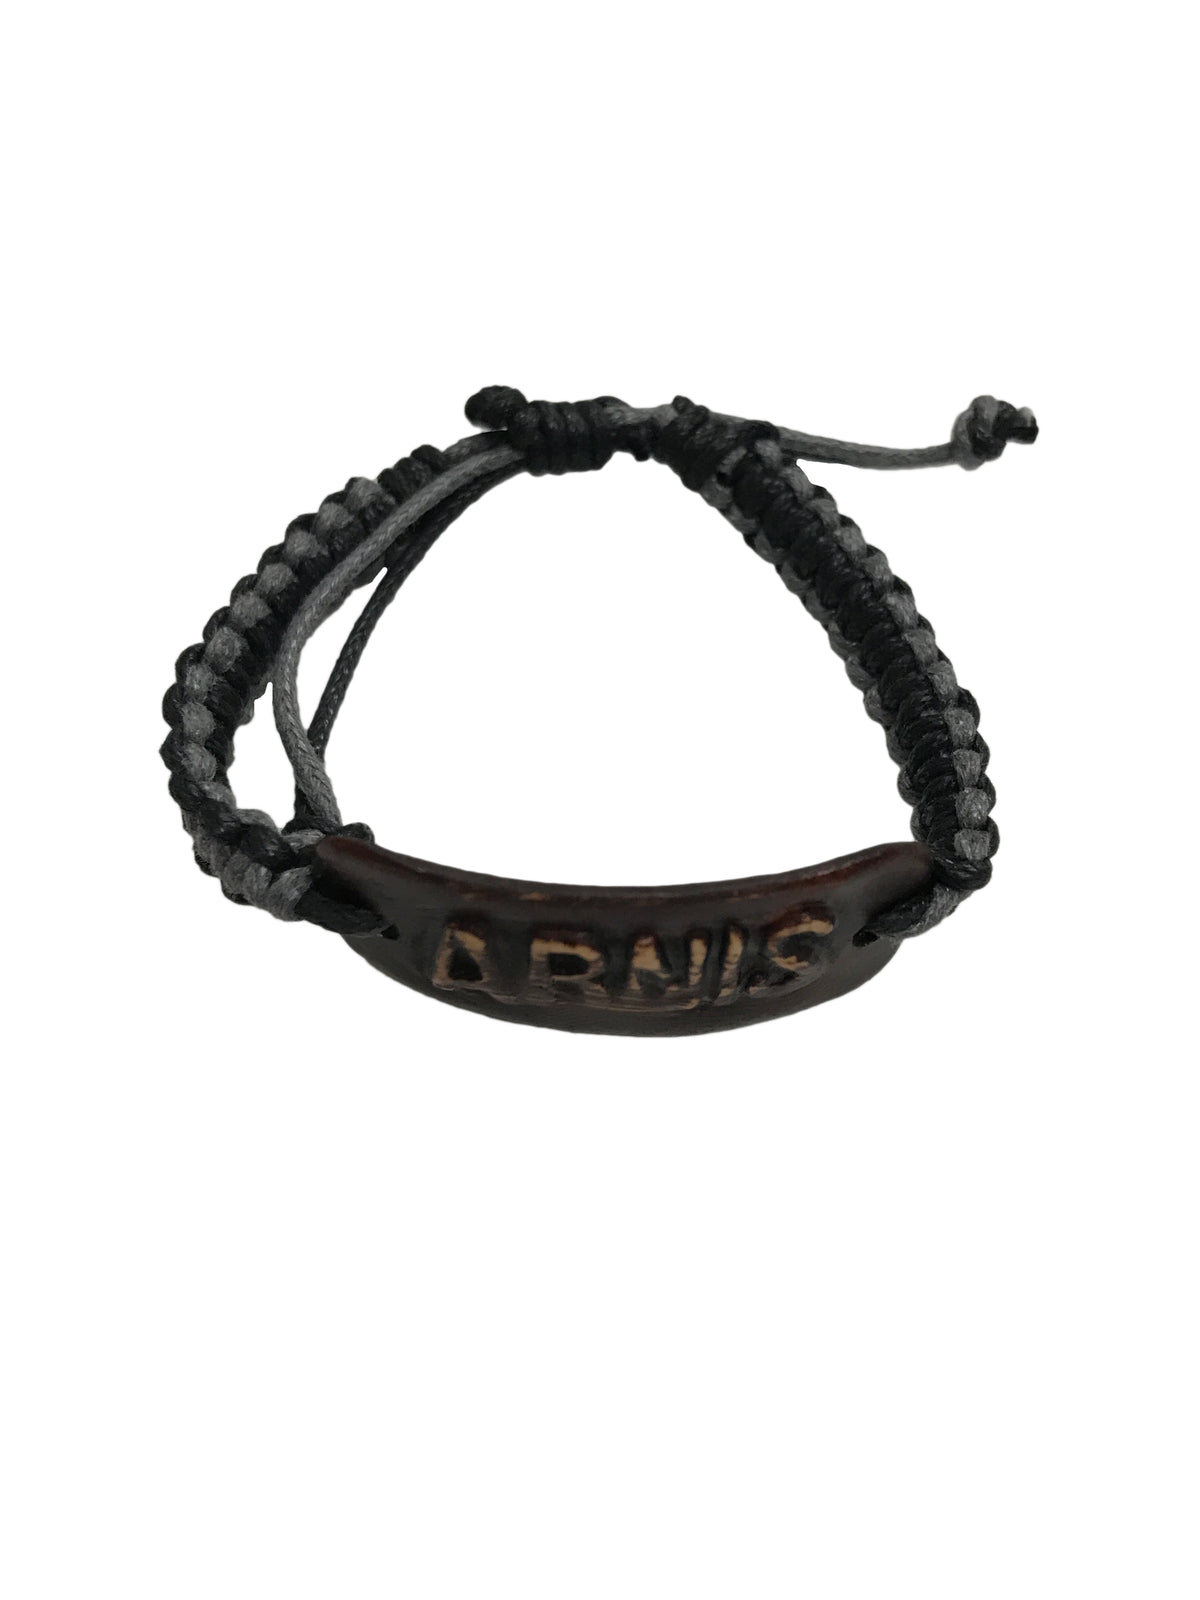 Handmade Leather ARNIS Adjustable Wristband